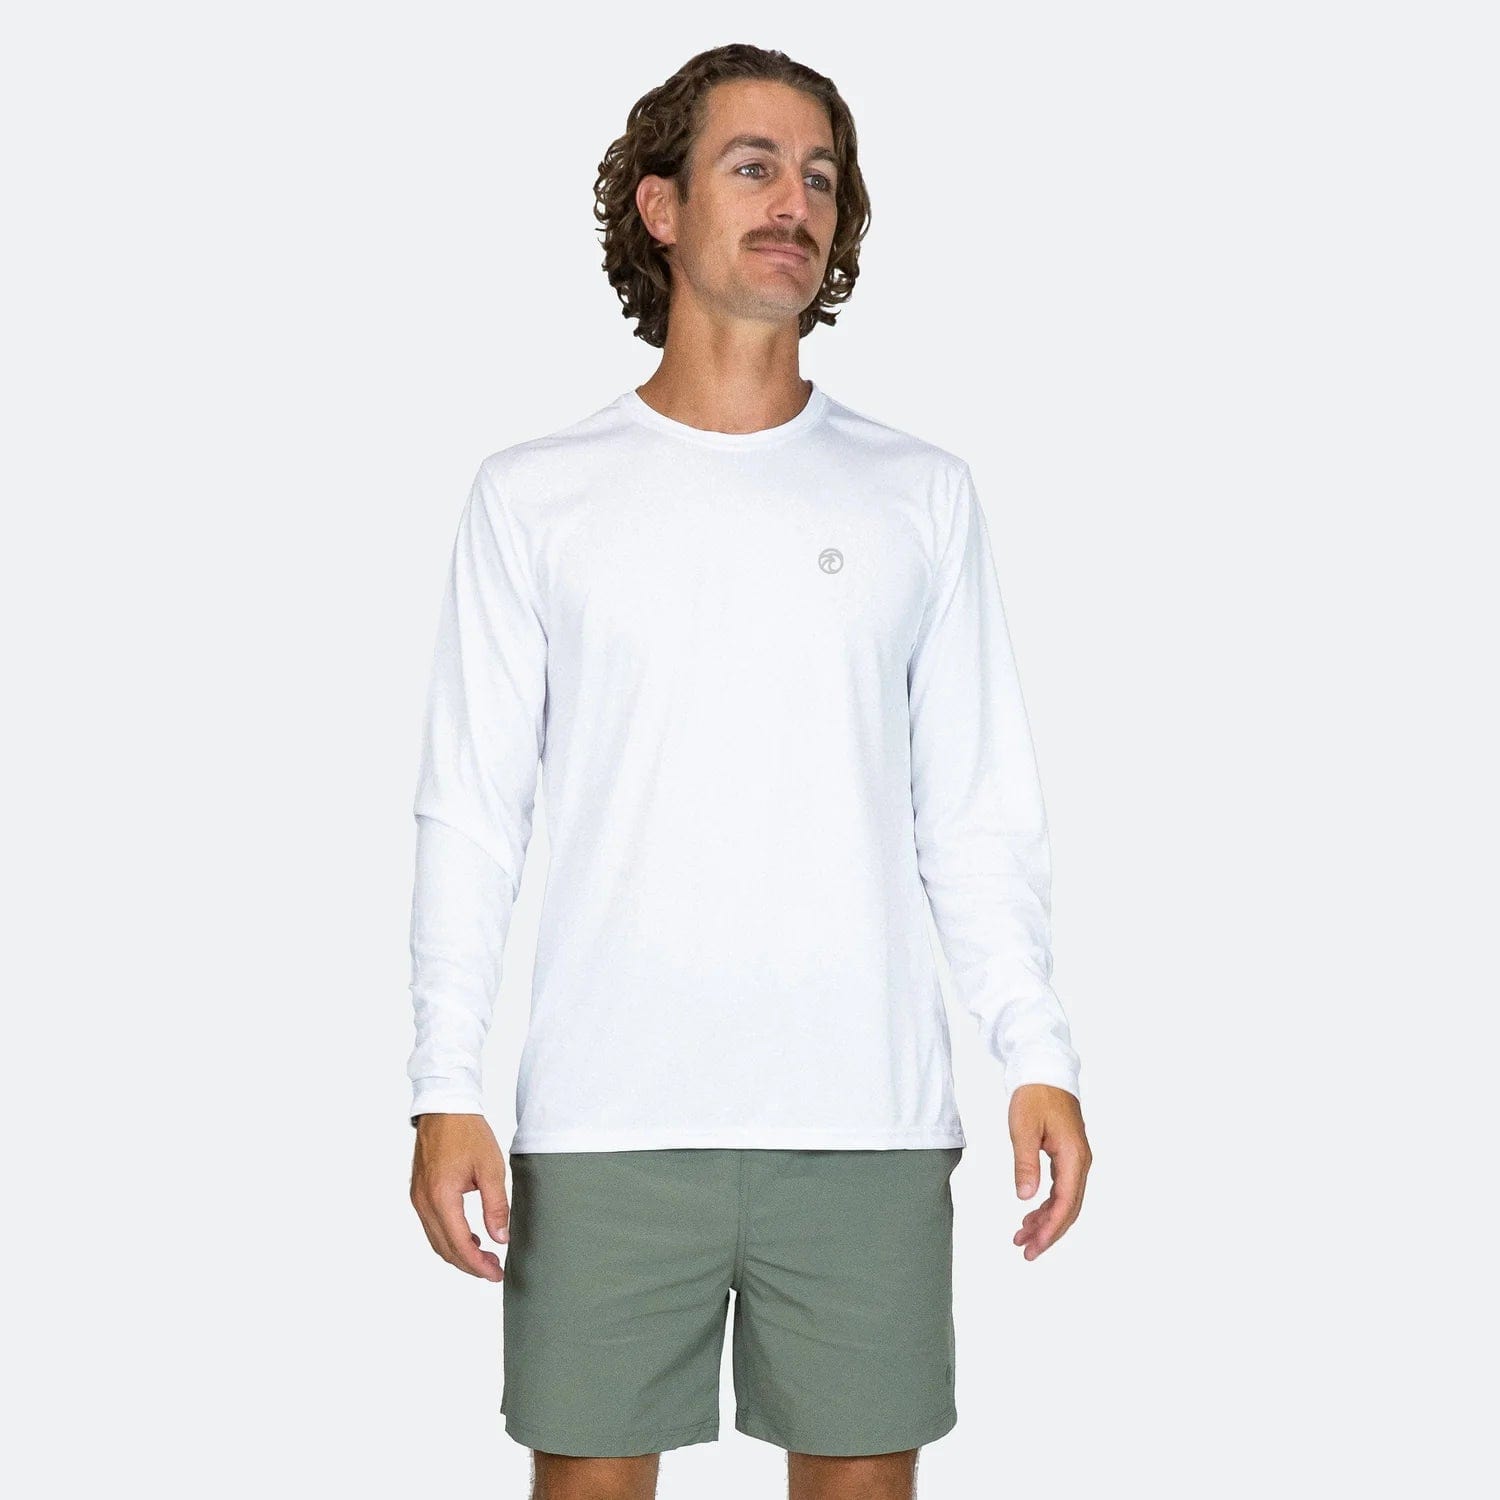 Vapor Apparel Men's UPF 50+ Sun Protection Solar Long Sleeve Shirt, White, x Large